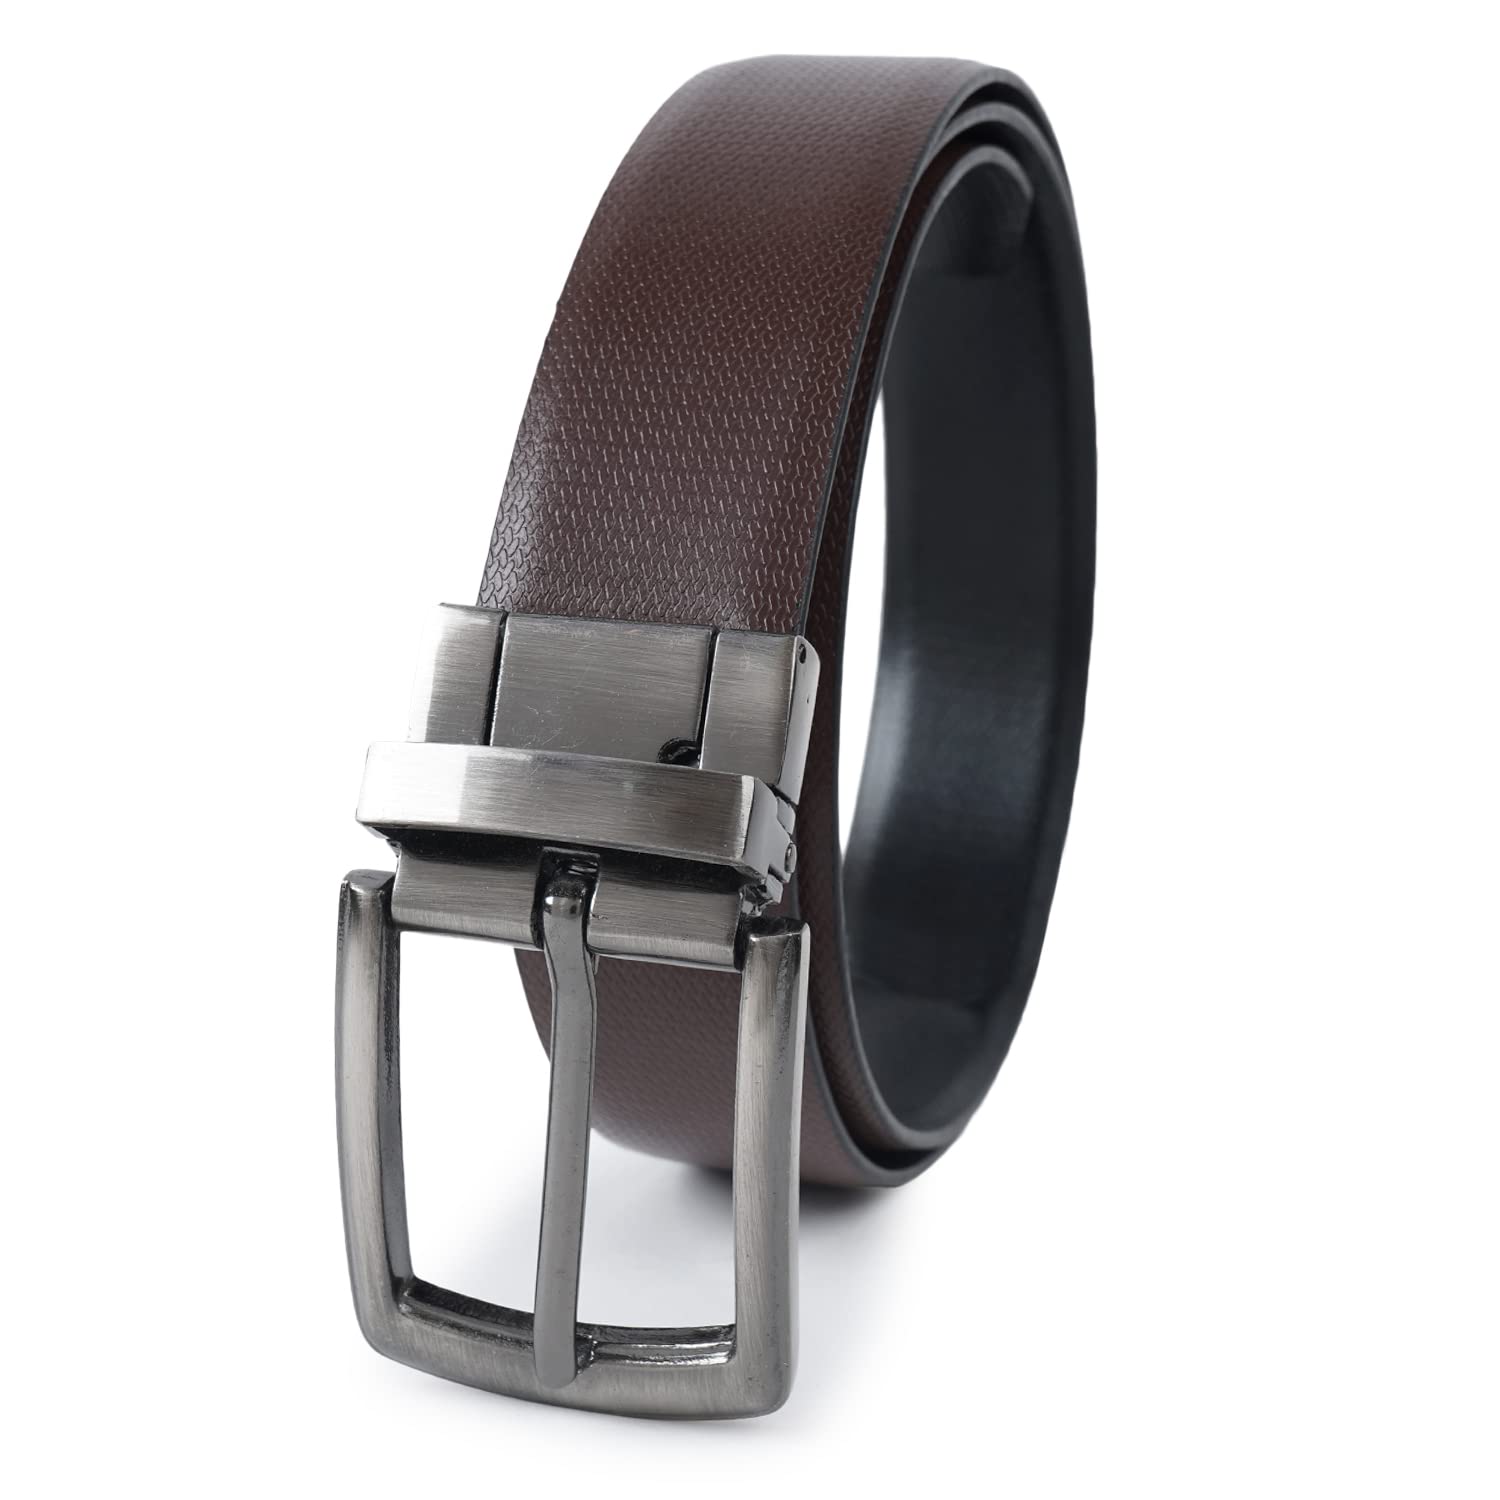 CIMONI Genuine Leather Classic Reversible Casual Formal Dailyuse Black Brown Belt For Men (1 Year Gurantee)